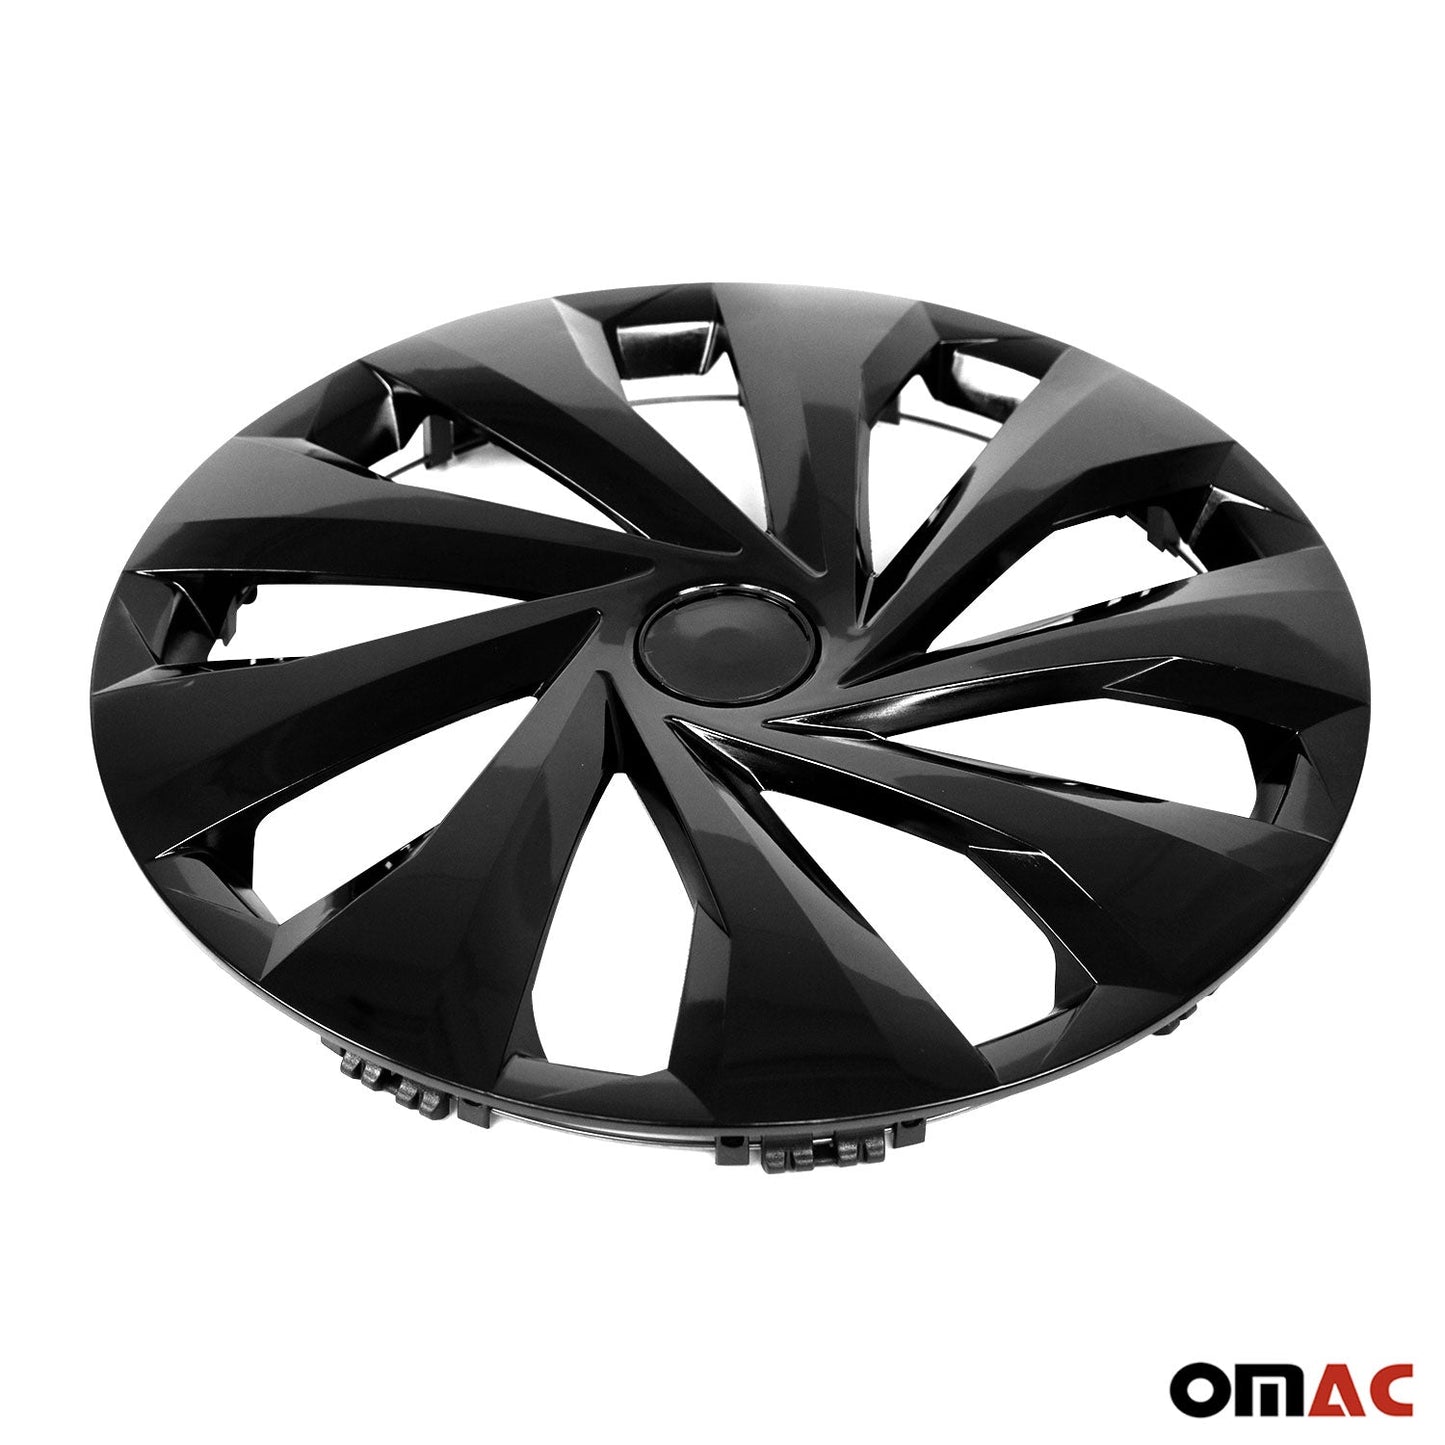 OMAC 15 Inch Wheel Rim Covers Hubcaps for Mazda Black Gloss G002464